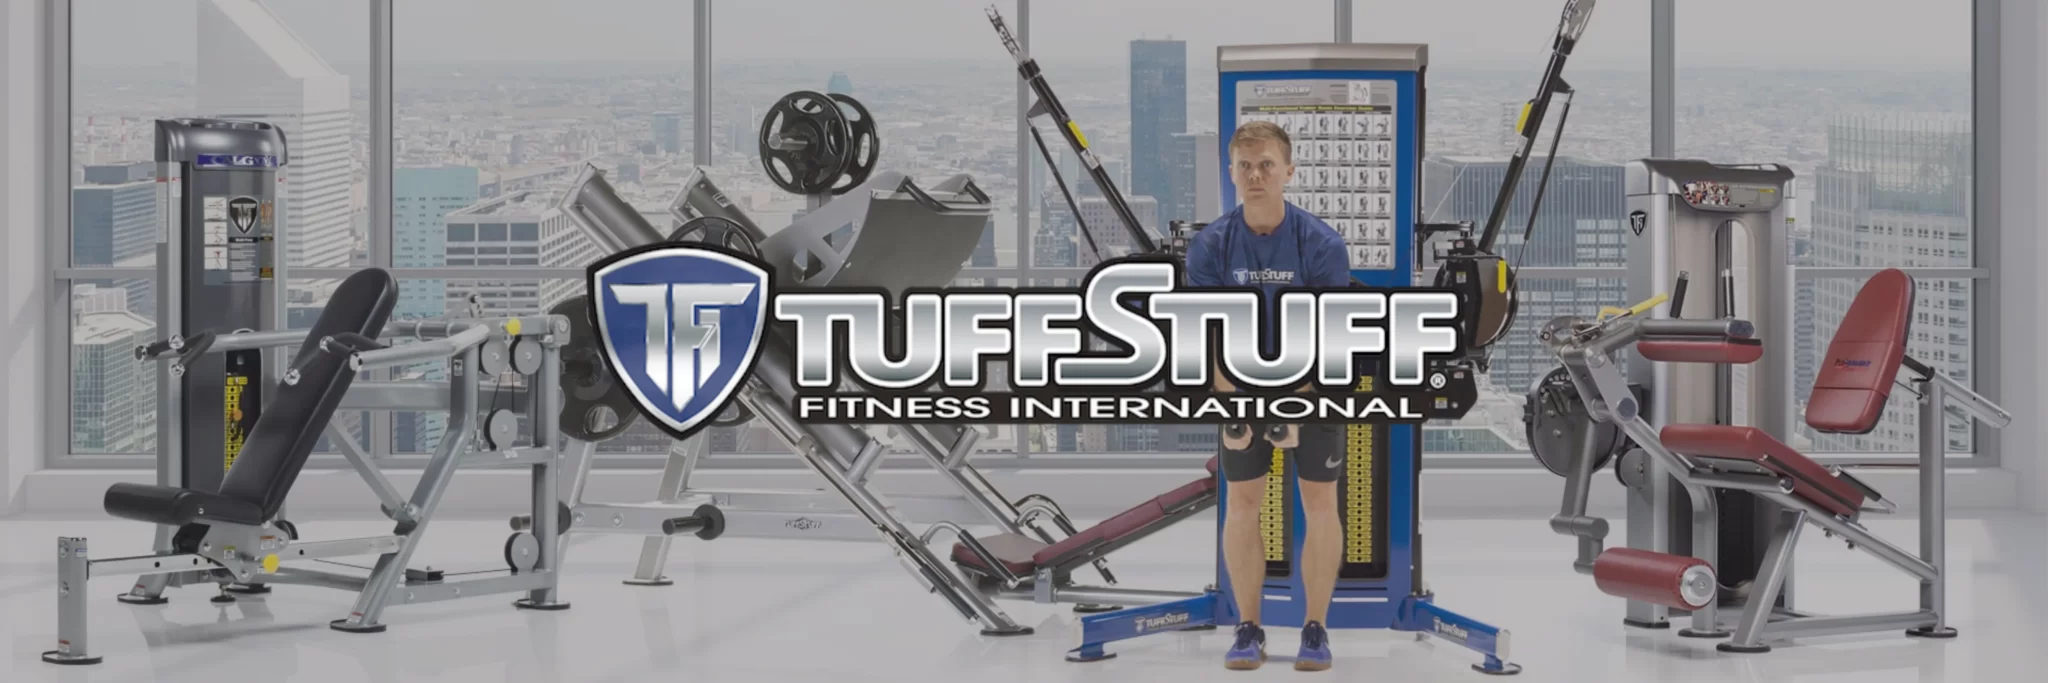 TuffStuff gym equipment banner